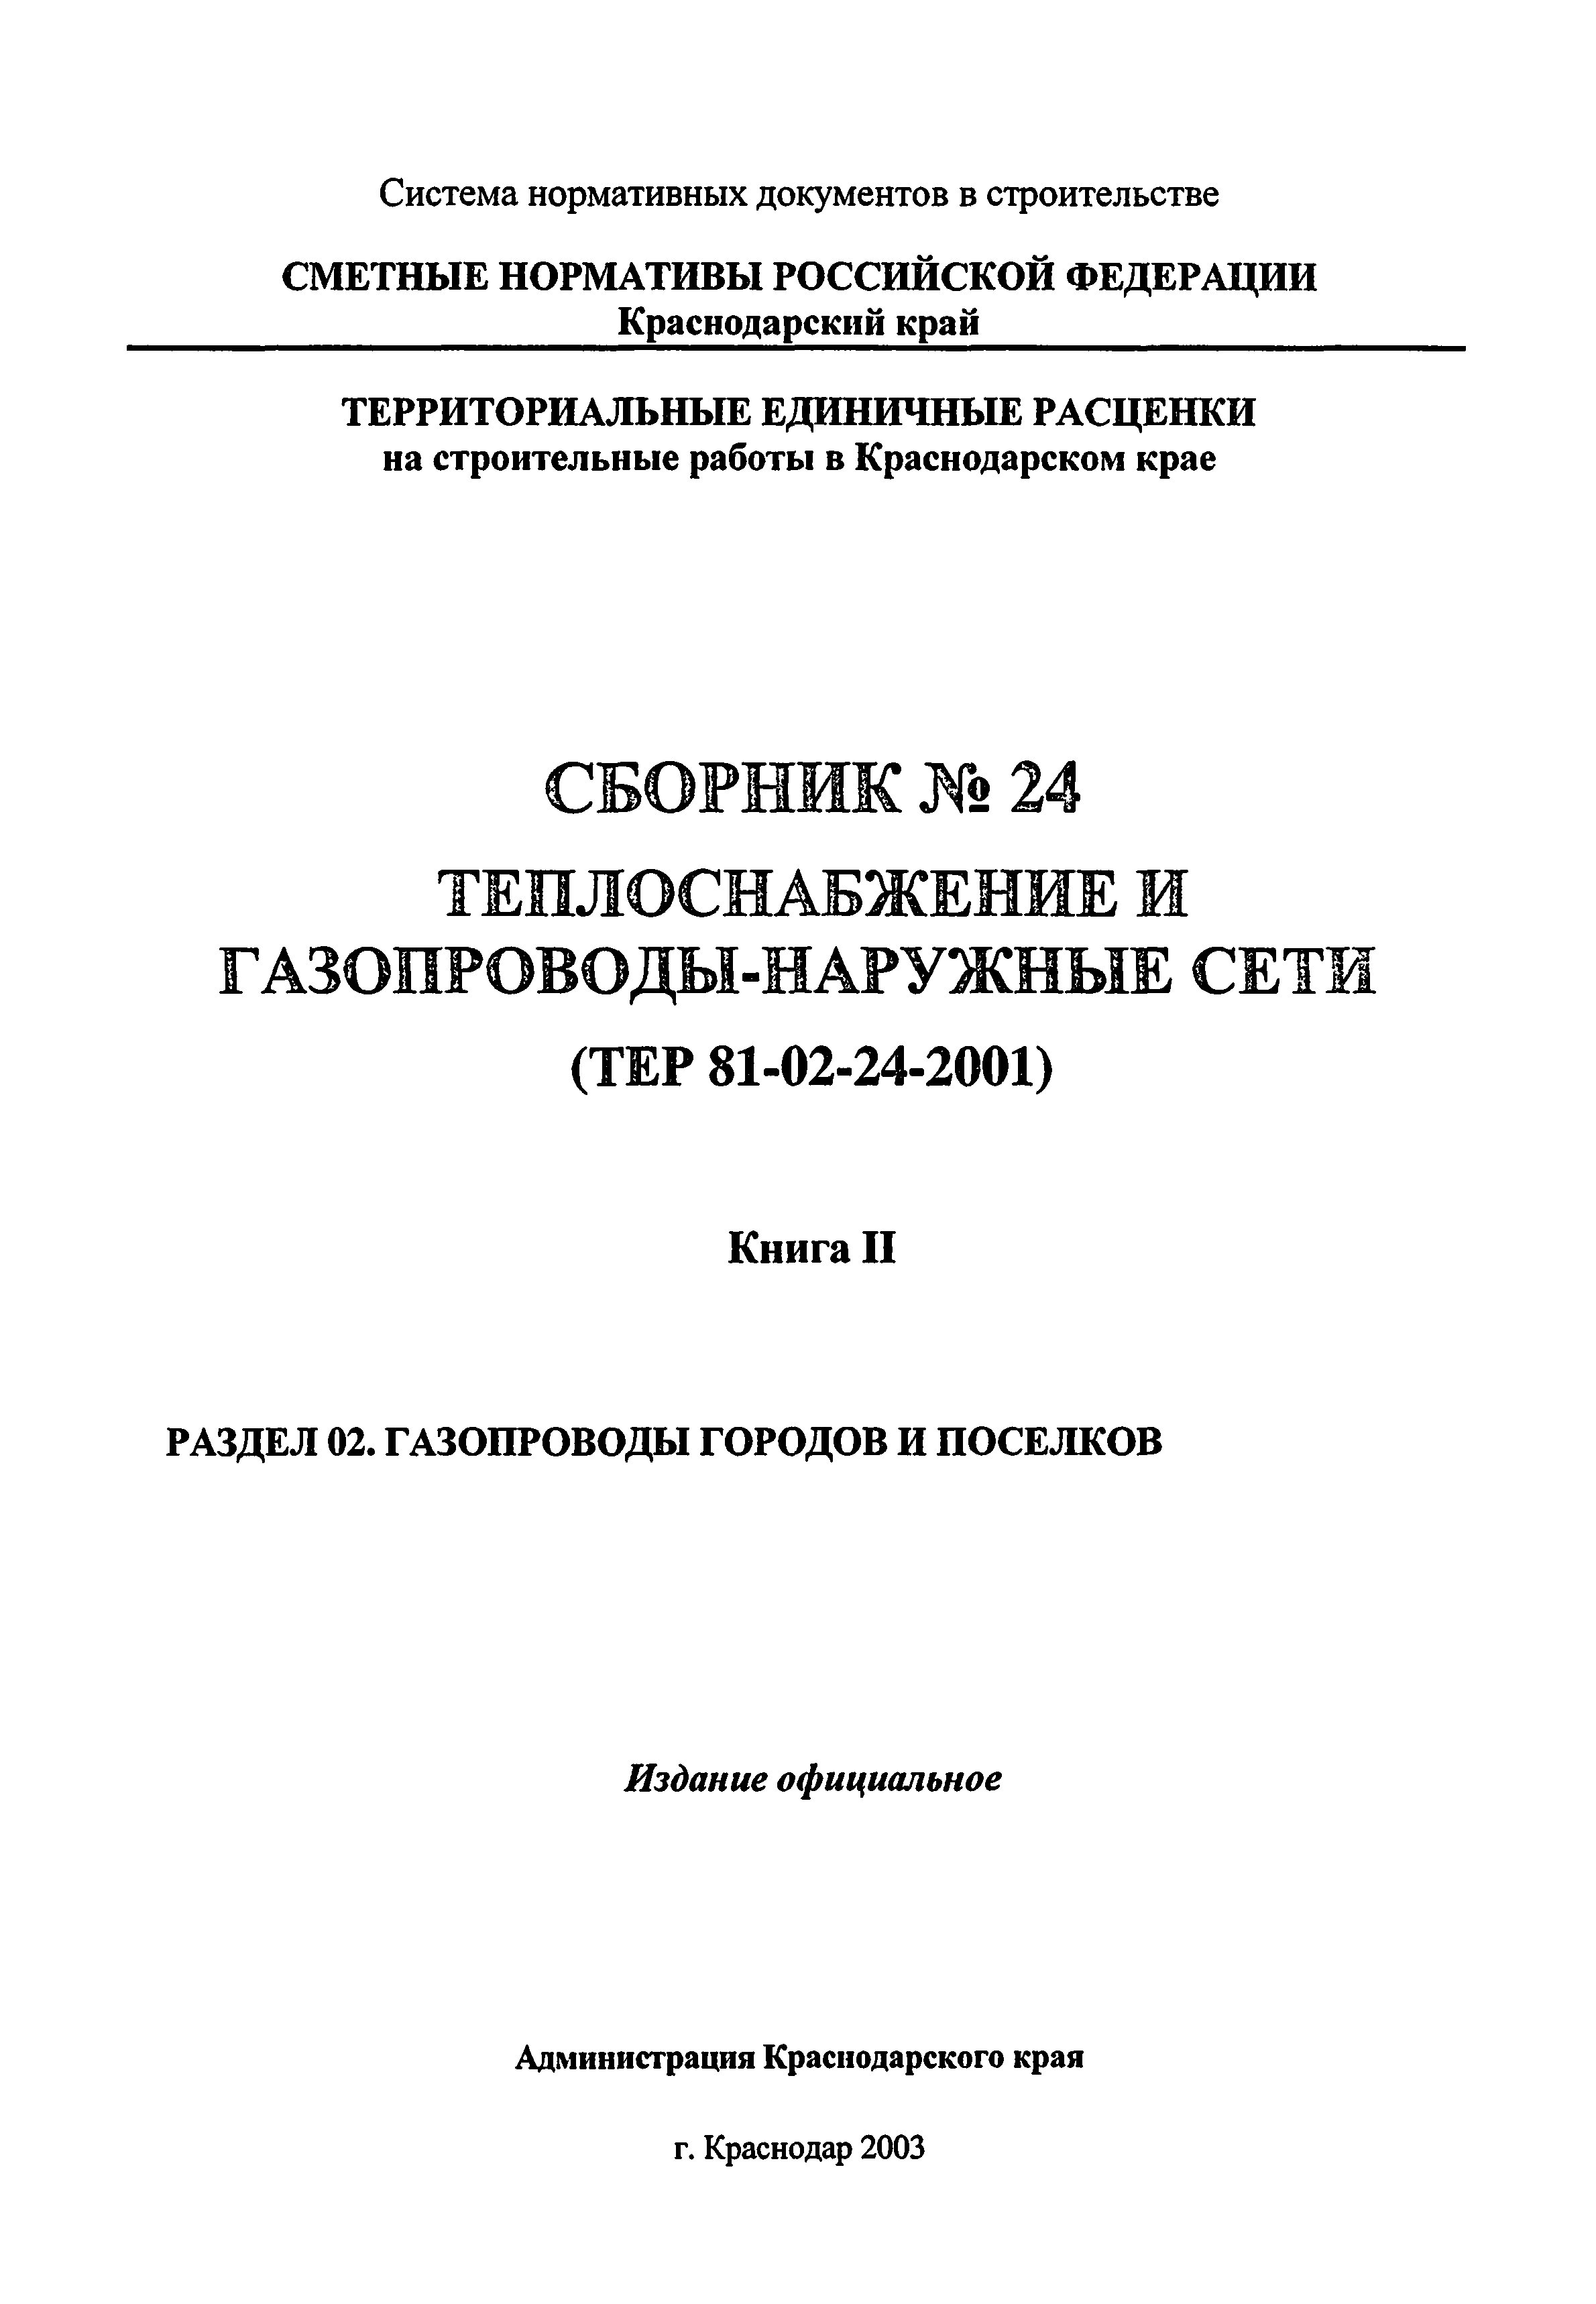 ТЕР Краснодарского края 2001-24